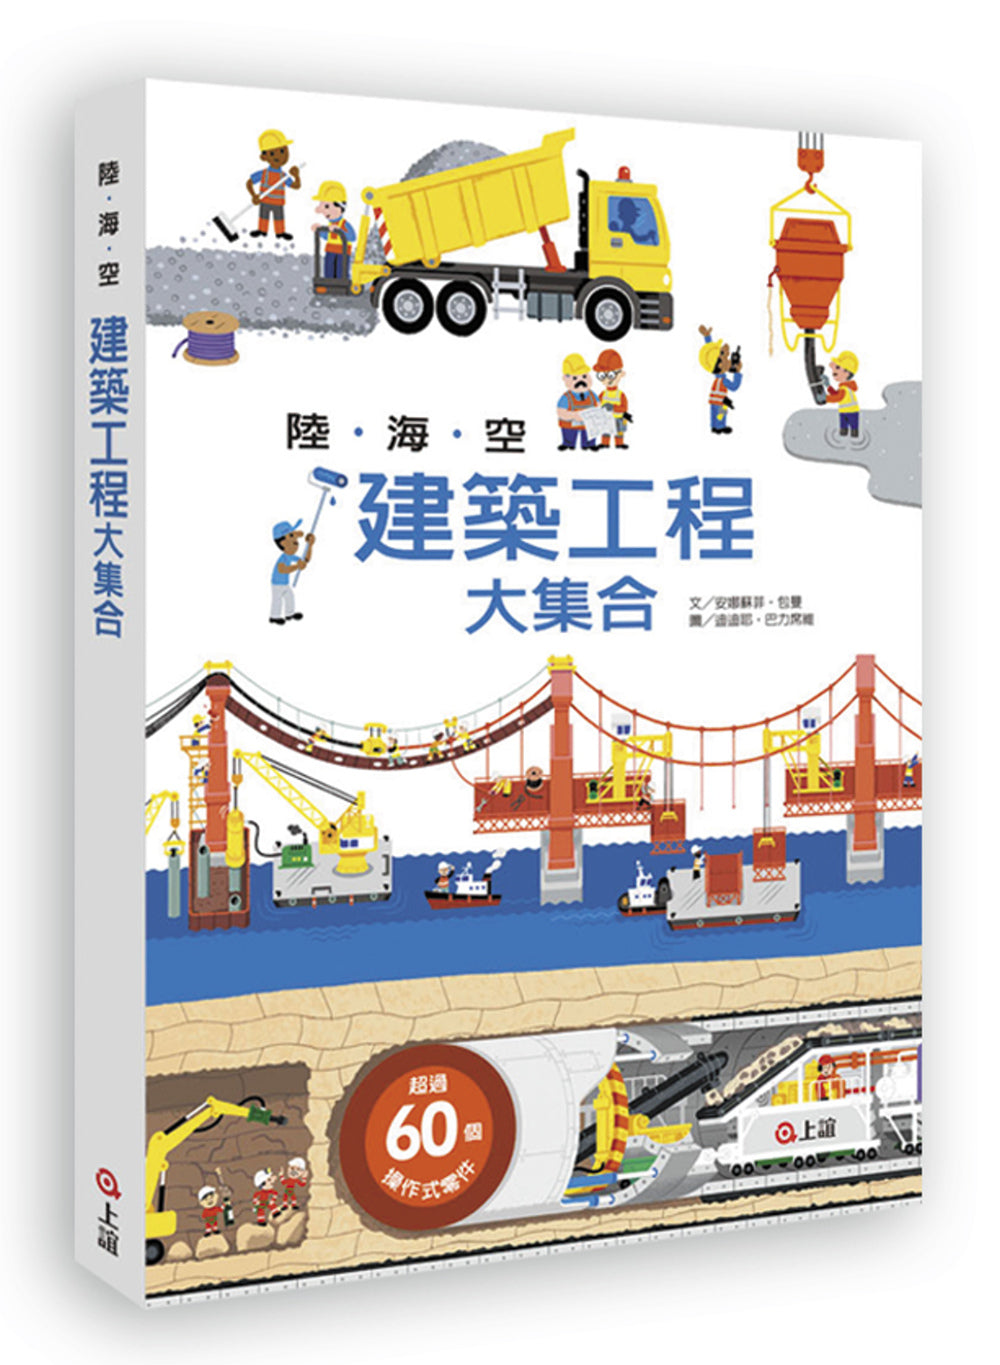 The Ultimate Construction Site Book • 陸海空建築工程大集合